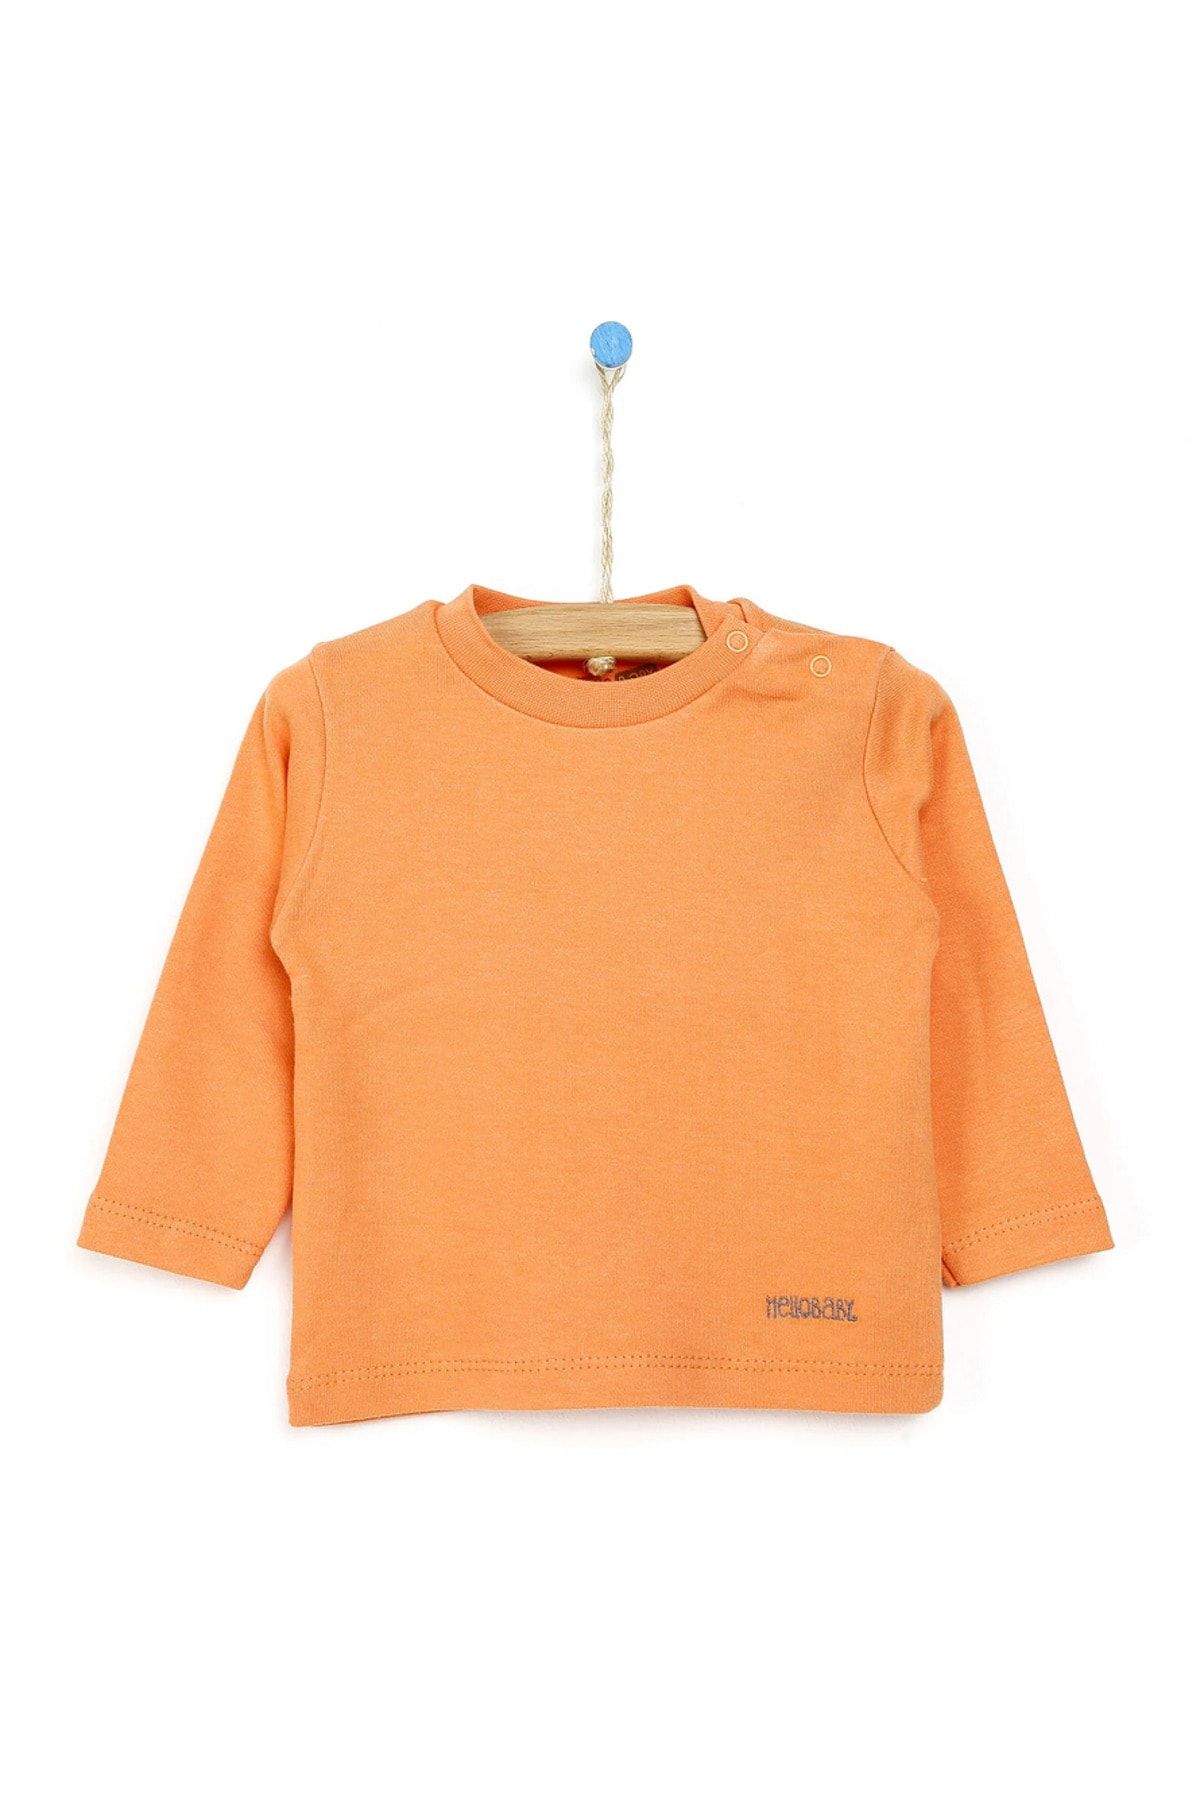 HelloBaby Basic Kız Bebek İnterlok Sweatshirt